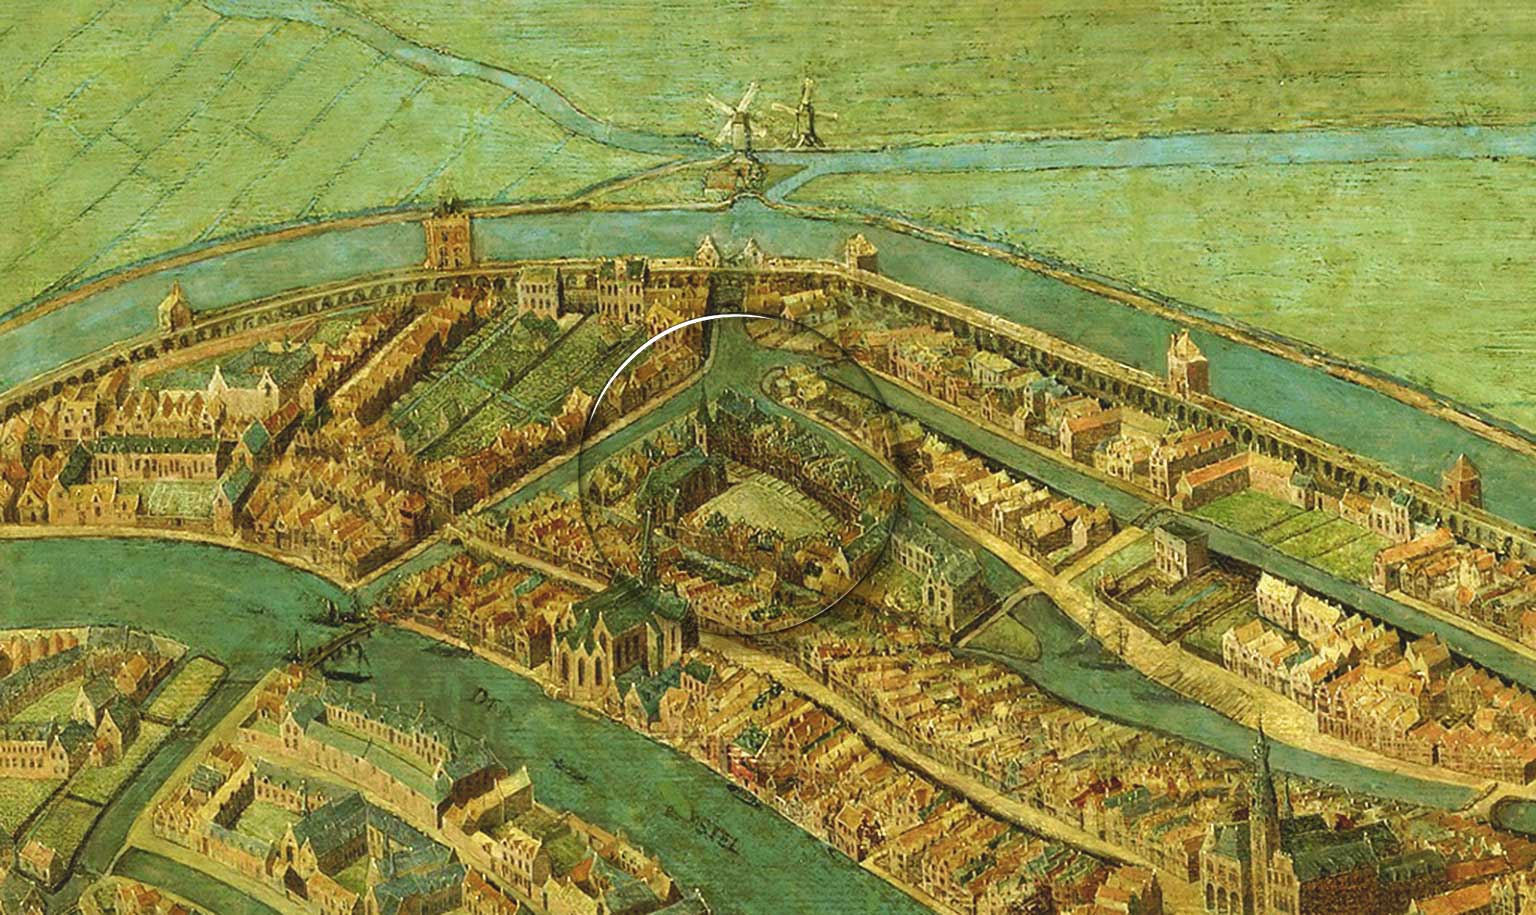 Begijnhof, Amsterdam, on a map from 1538 by Cornelis Anthonisz.